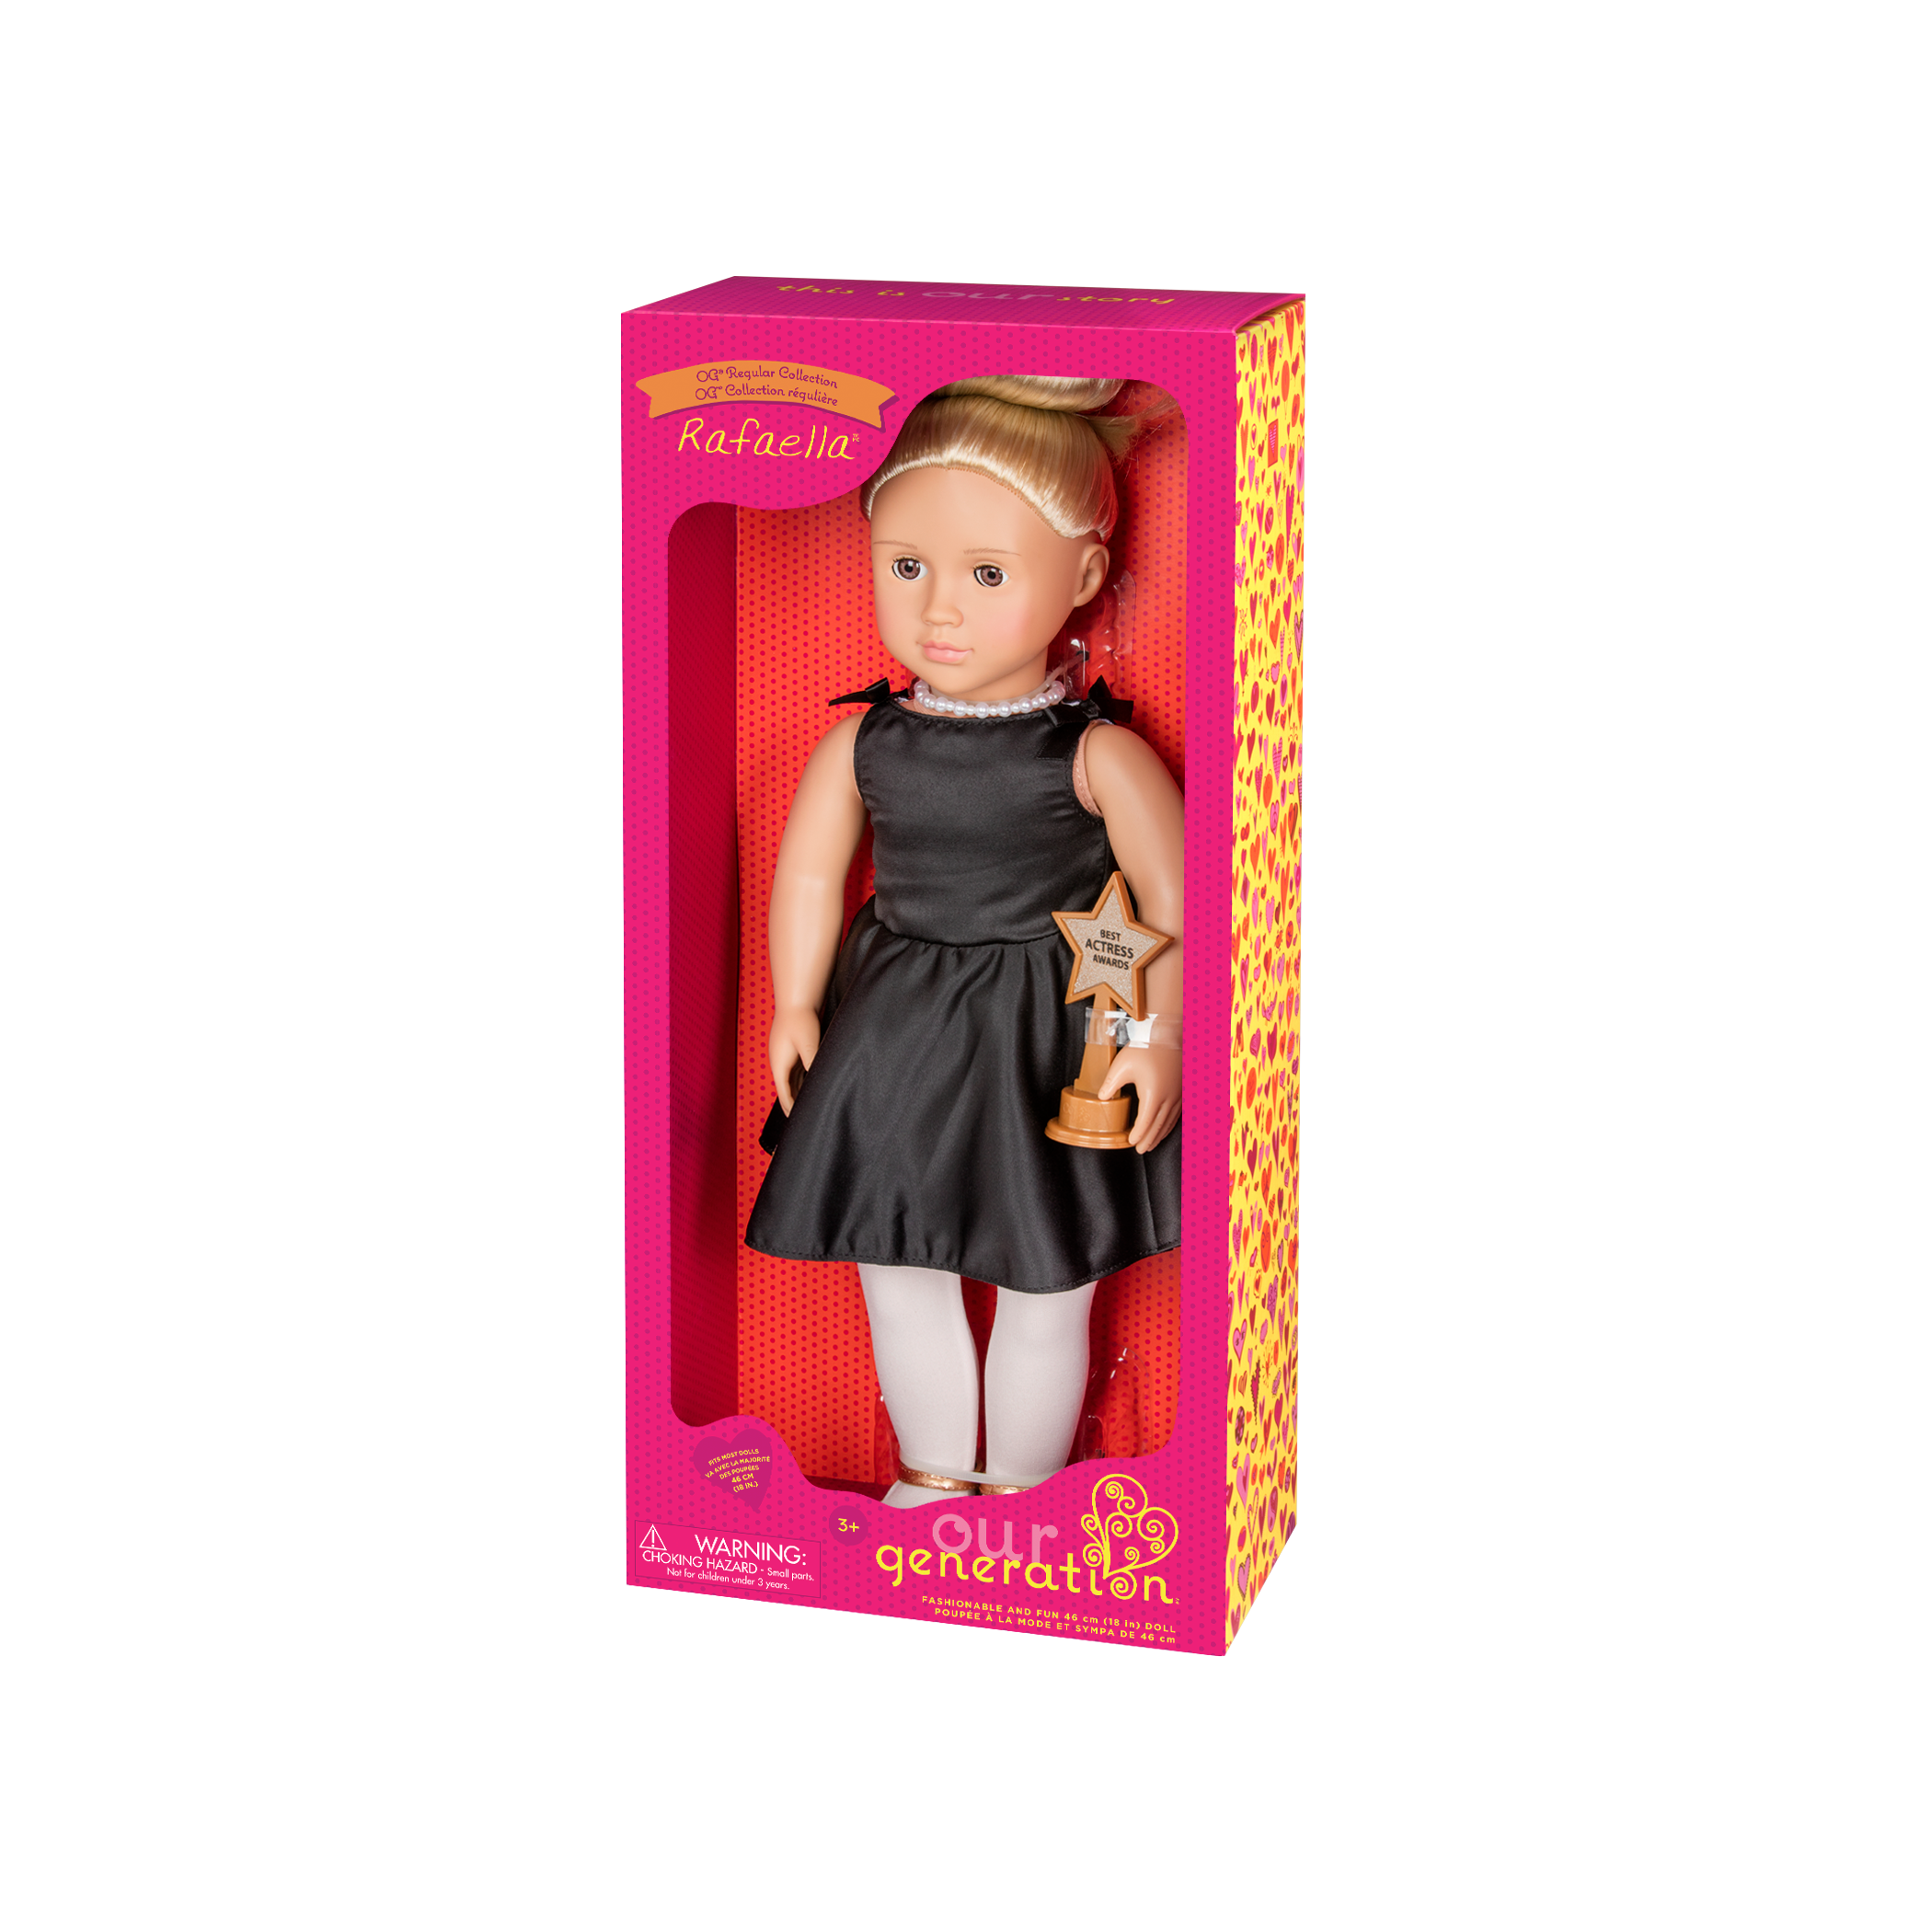 Rafaella Regular 18-inch Actress Doll in packaging